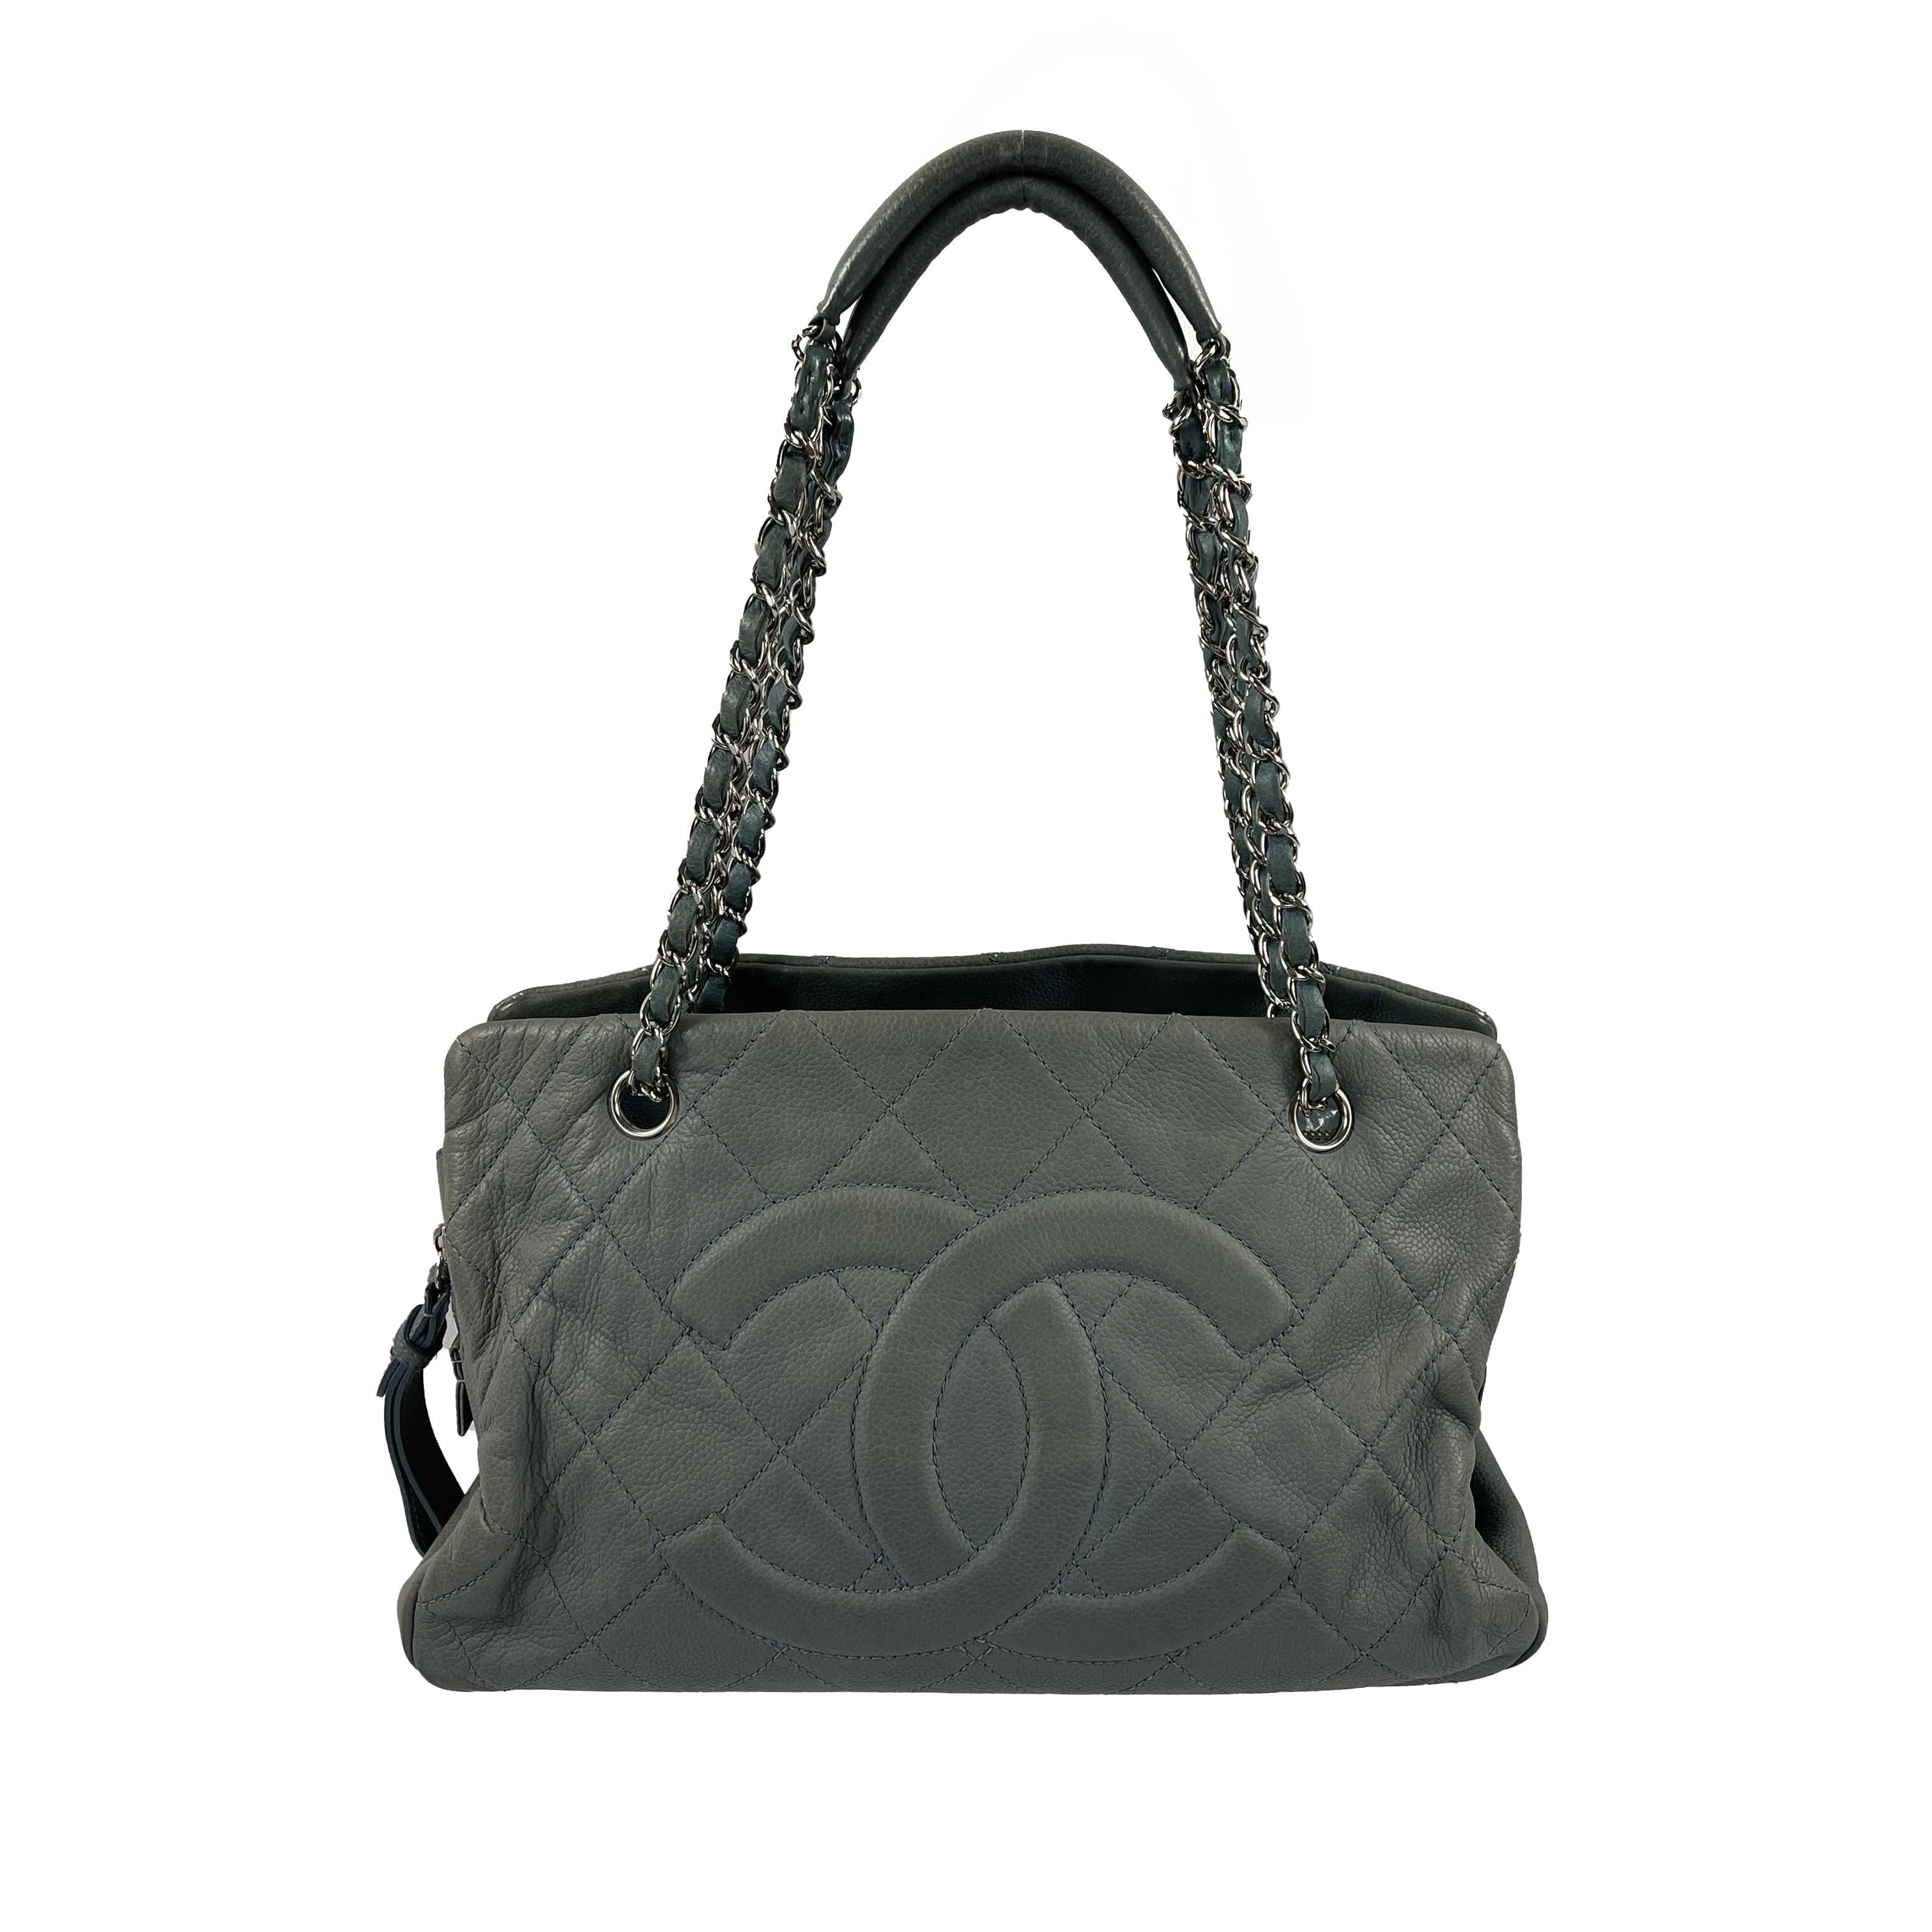 CHANEL  Seafoam / Silver CC Caviar Medium Leather Shopping Tote / Shoulder Bag For Sale 3